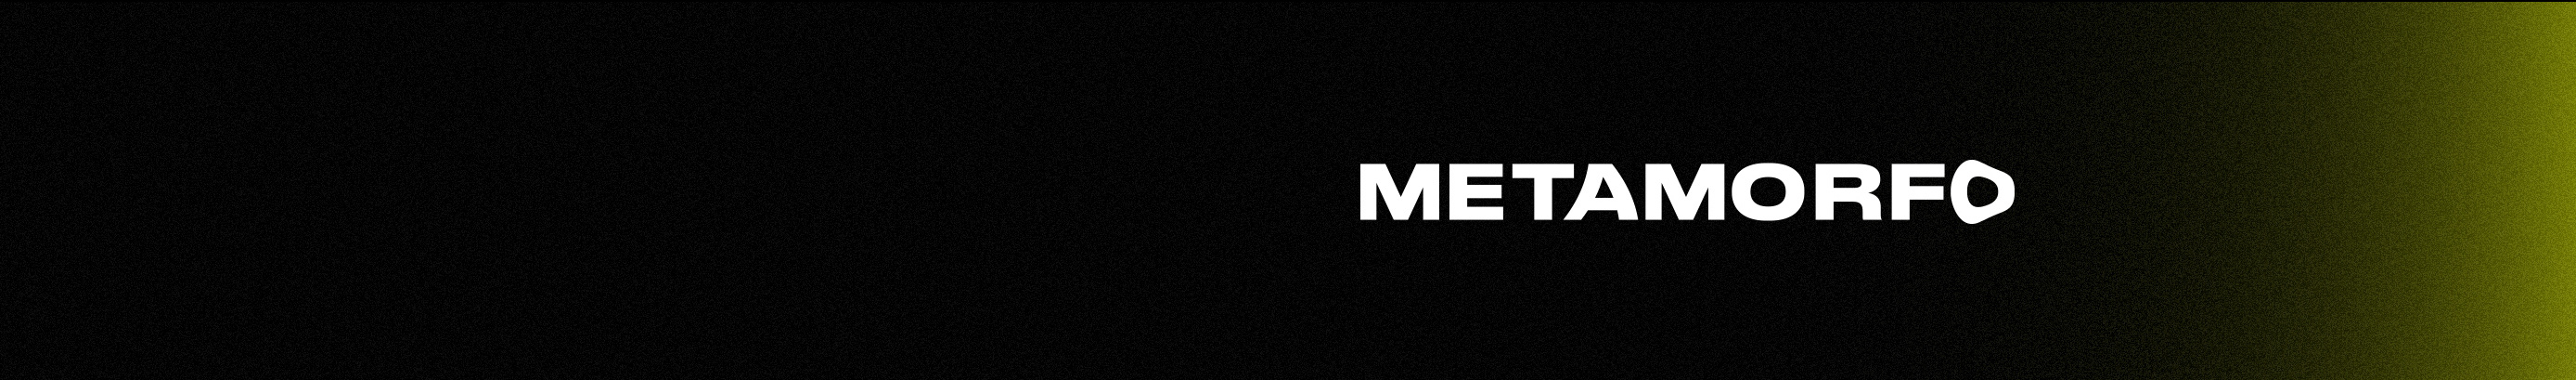 Metamorfo .'s profile banner